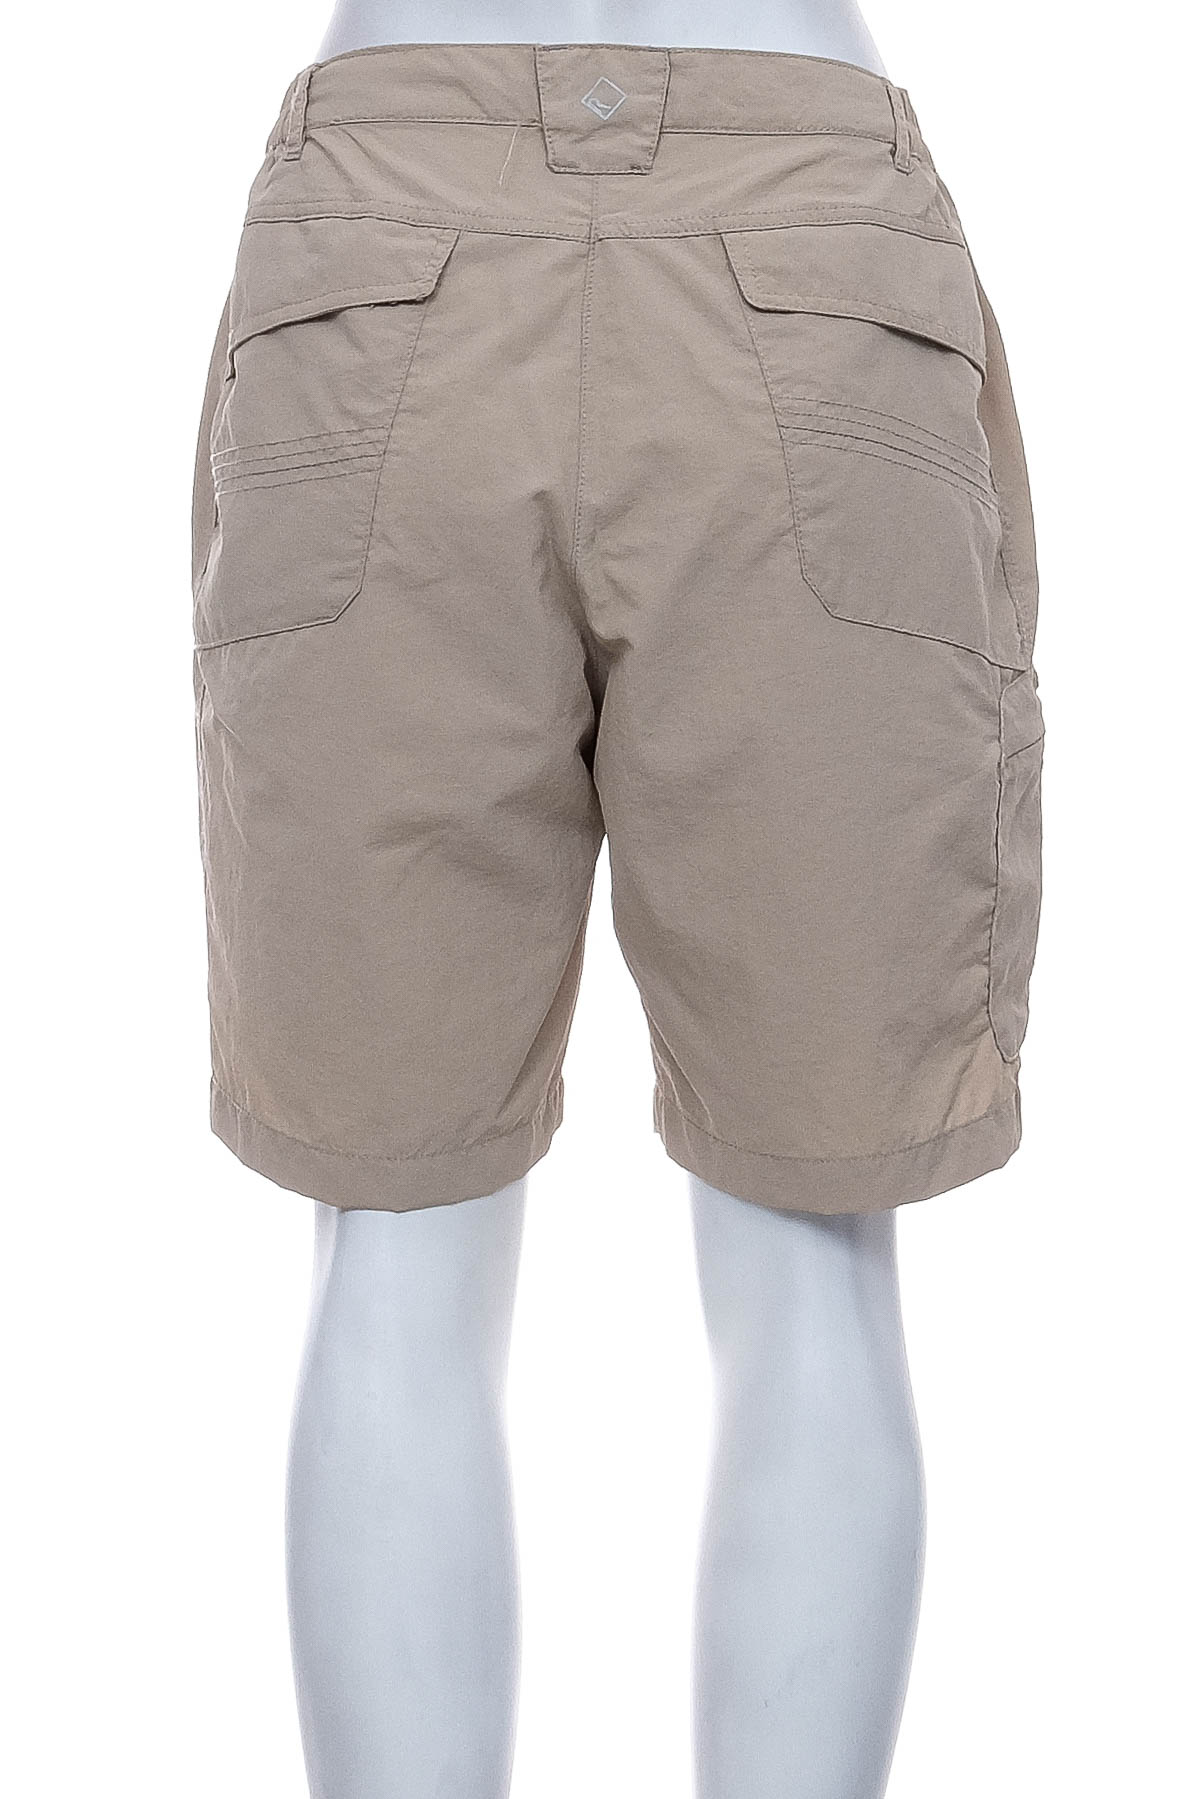 Female shorts - Regatta - 1